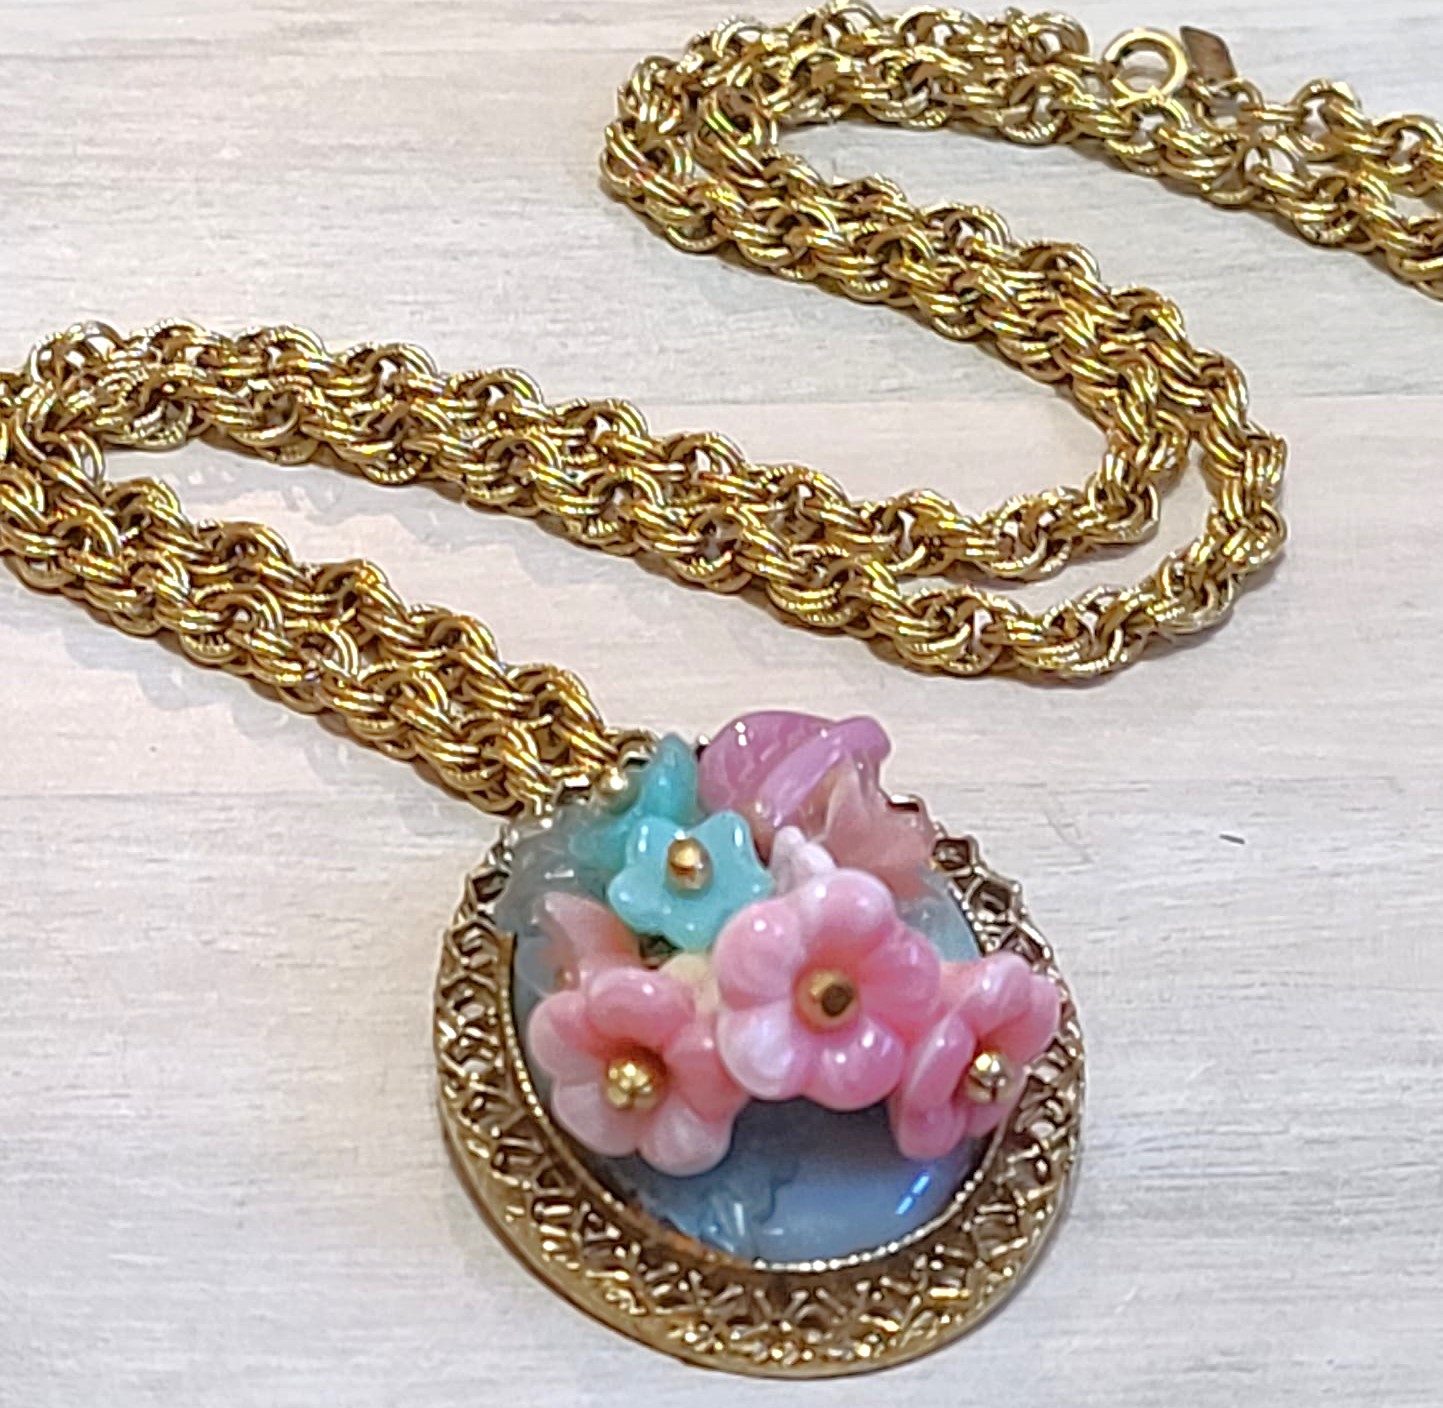 Designer Monet necklace, glass floral 3d pendant on thick goldtone weave chain, vintage statement necklace